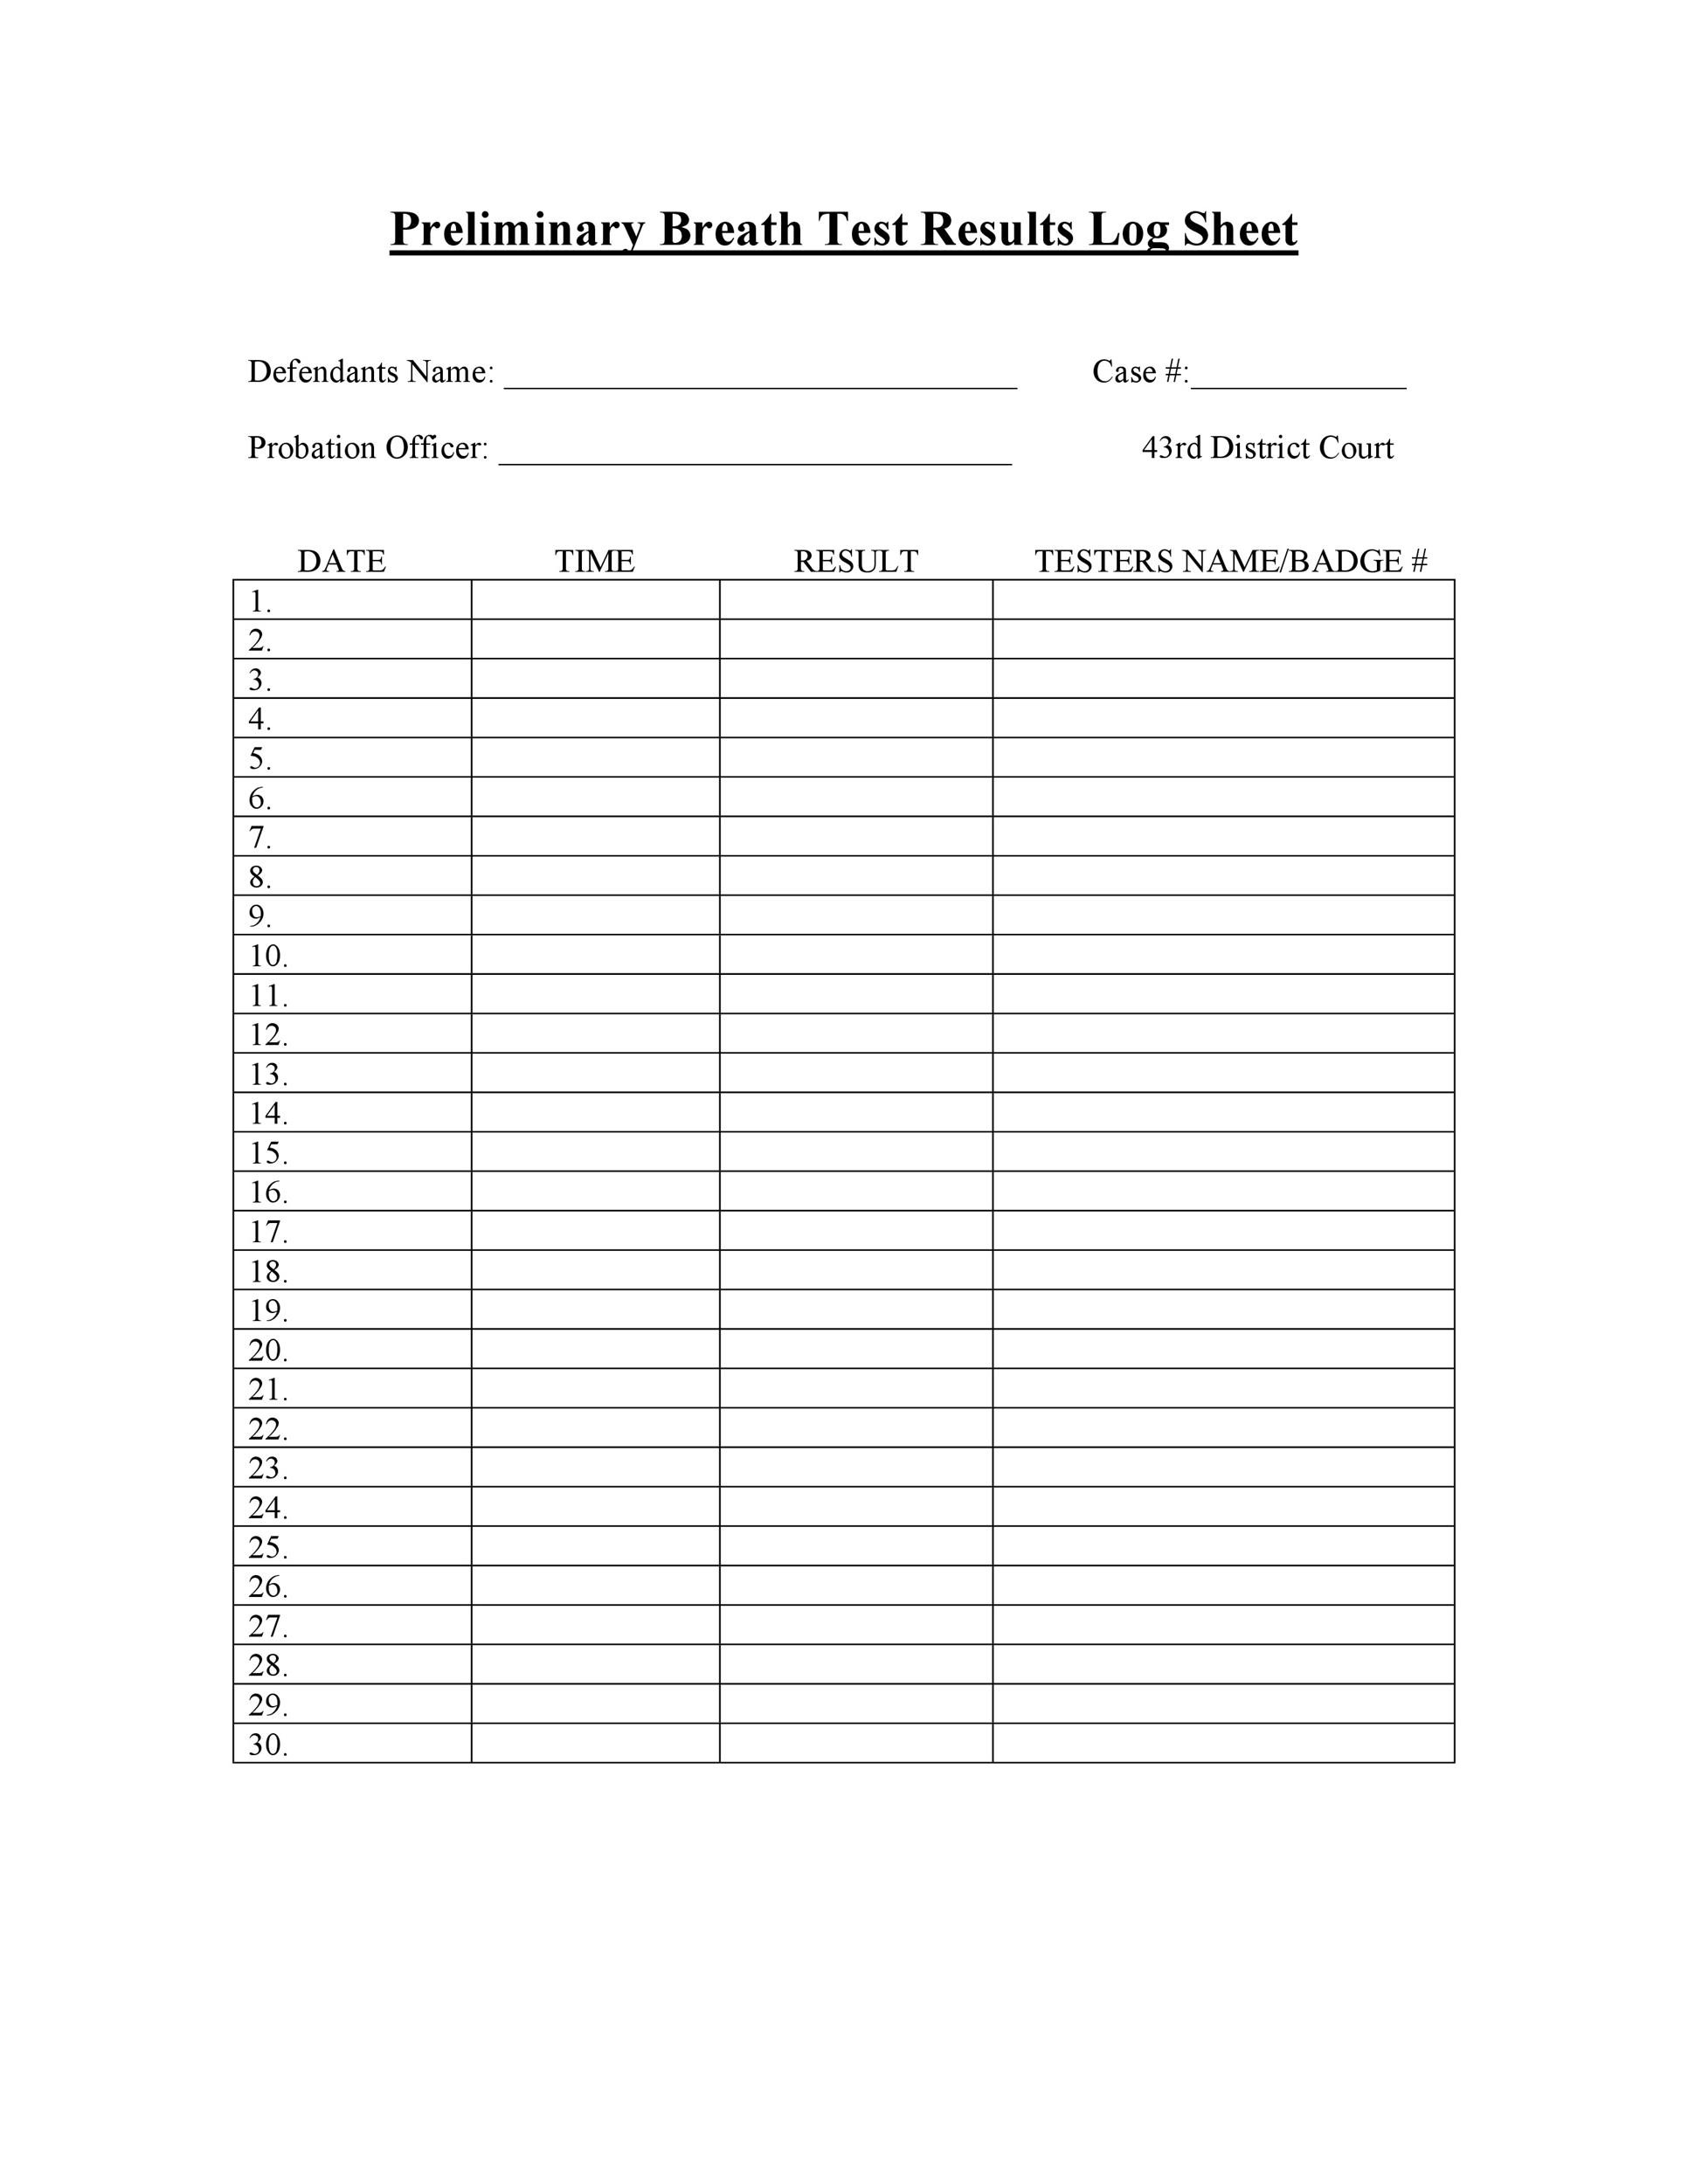 printable-log-sheet-tutore-org-master-of-documents